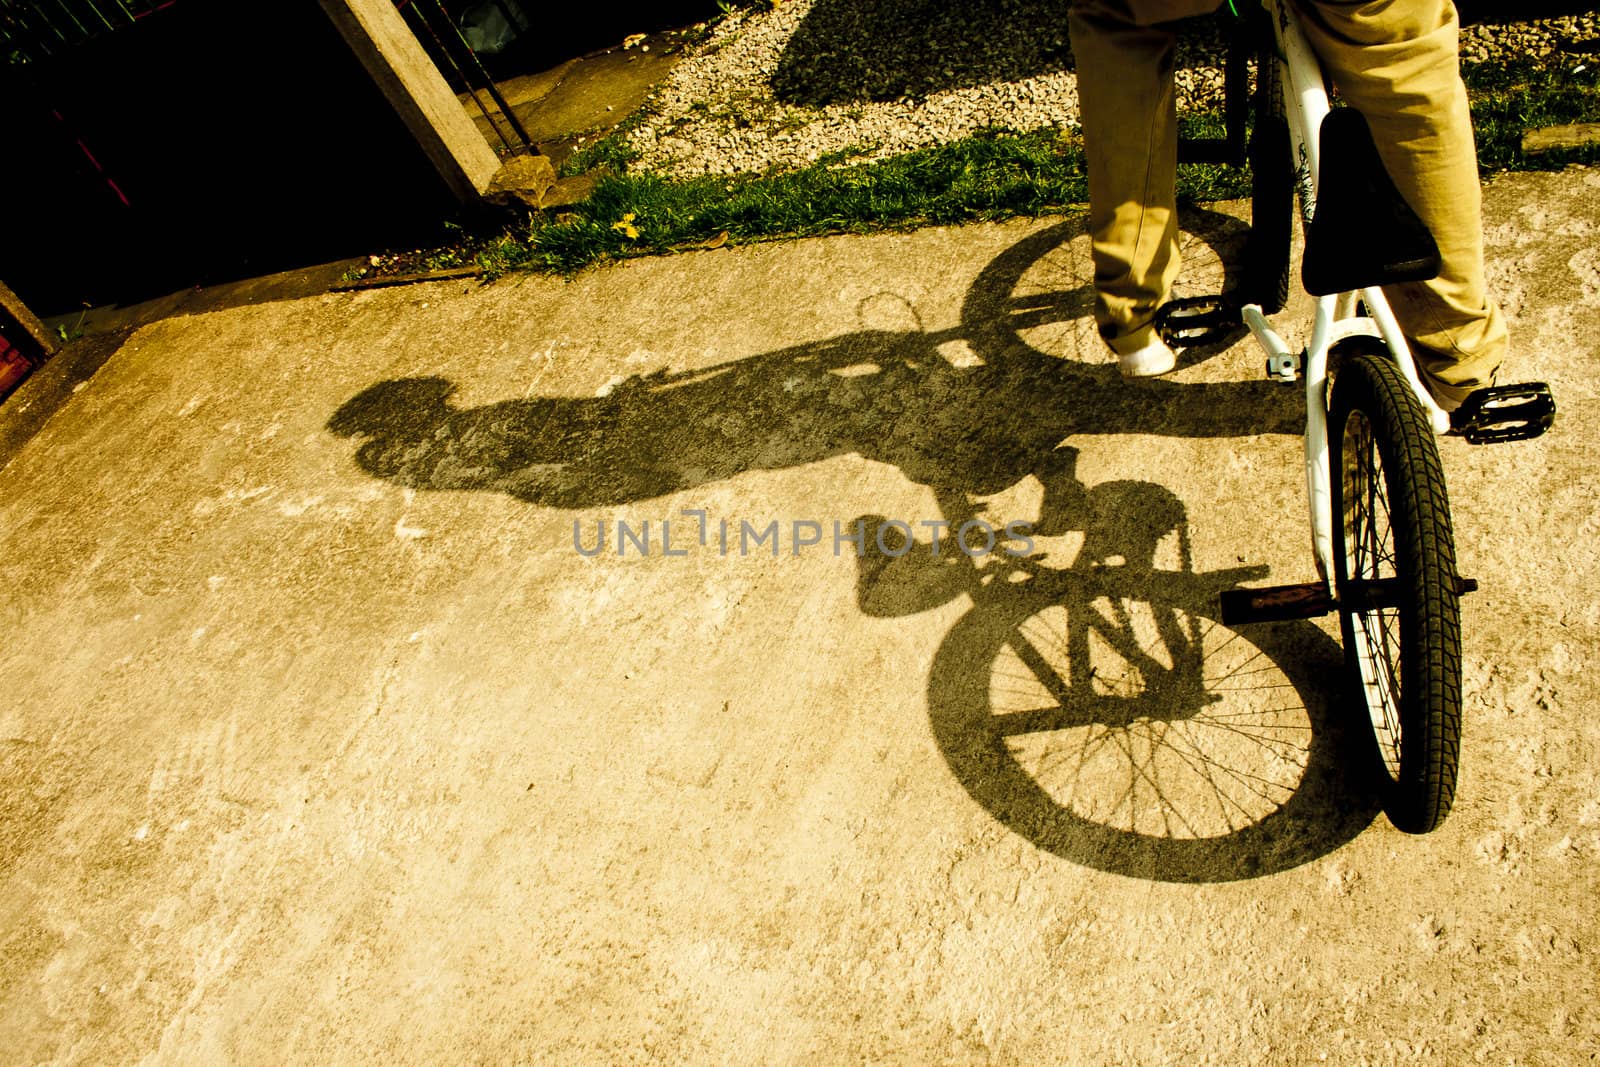 A man sitting on a BMX bike with a shadow cast across a concrete